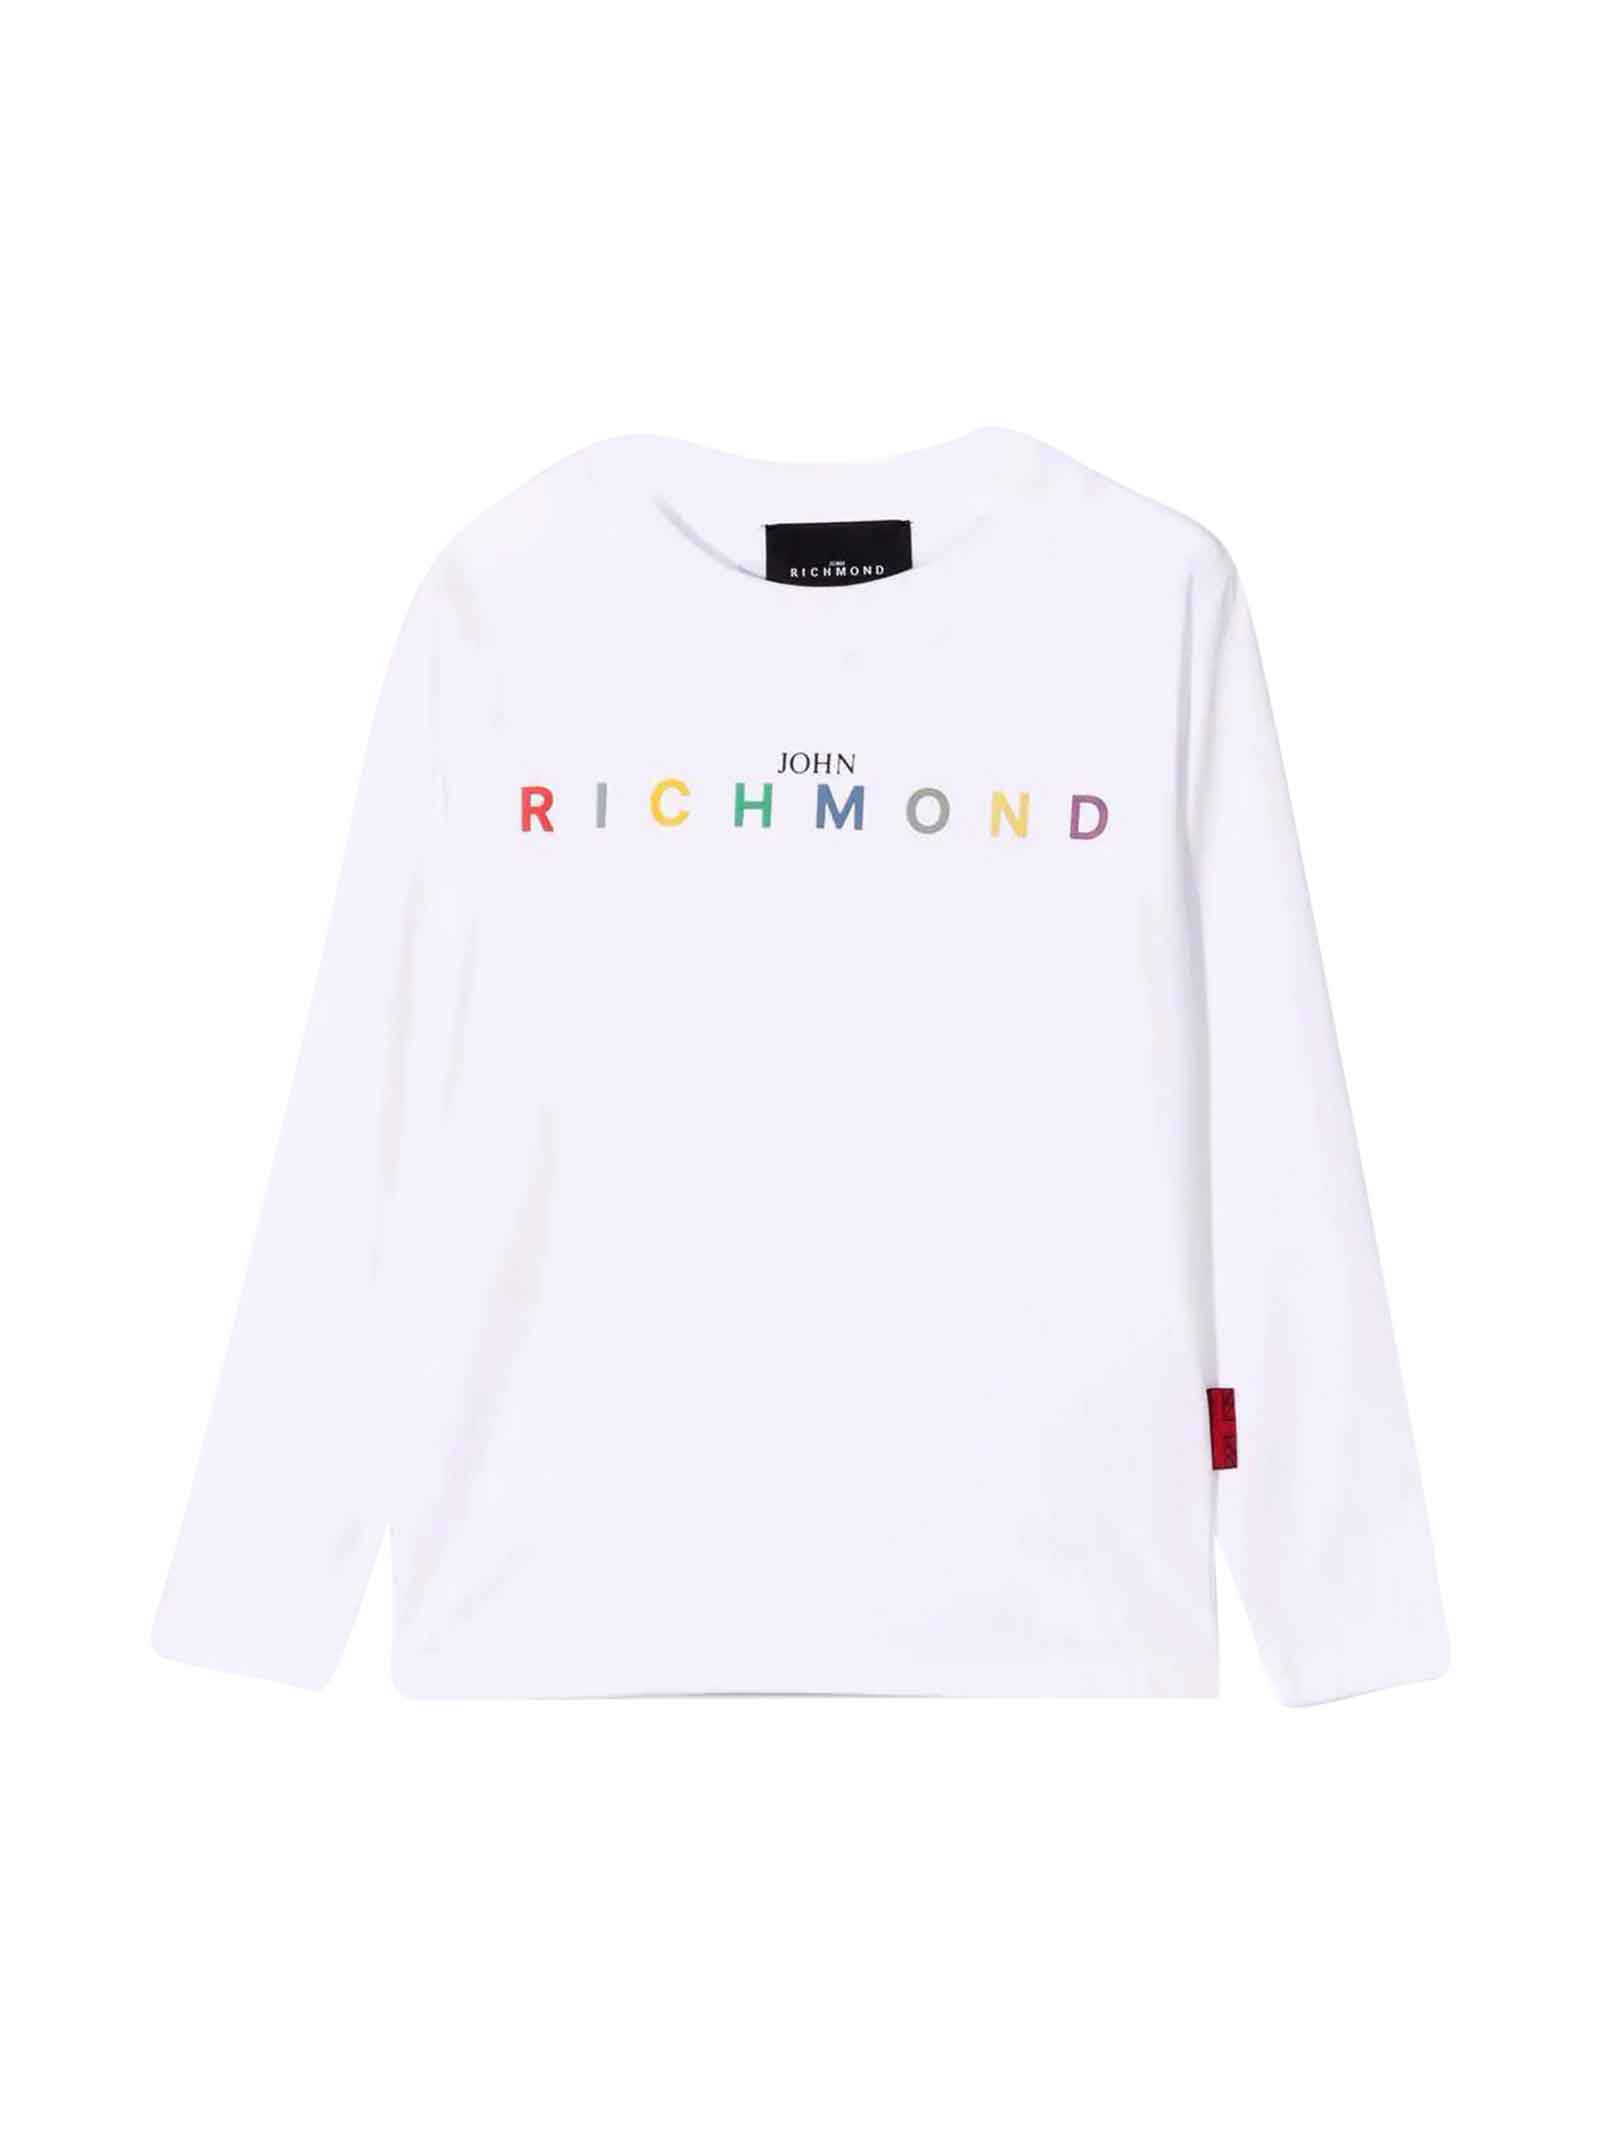 John Richmond White T-shirt With Multicolor Print